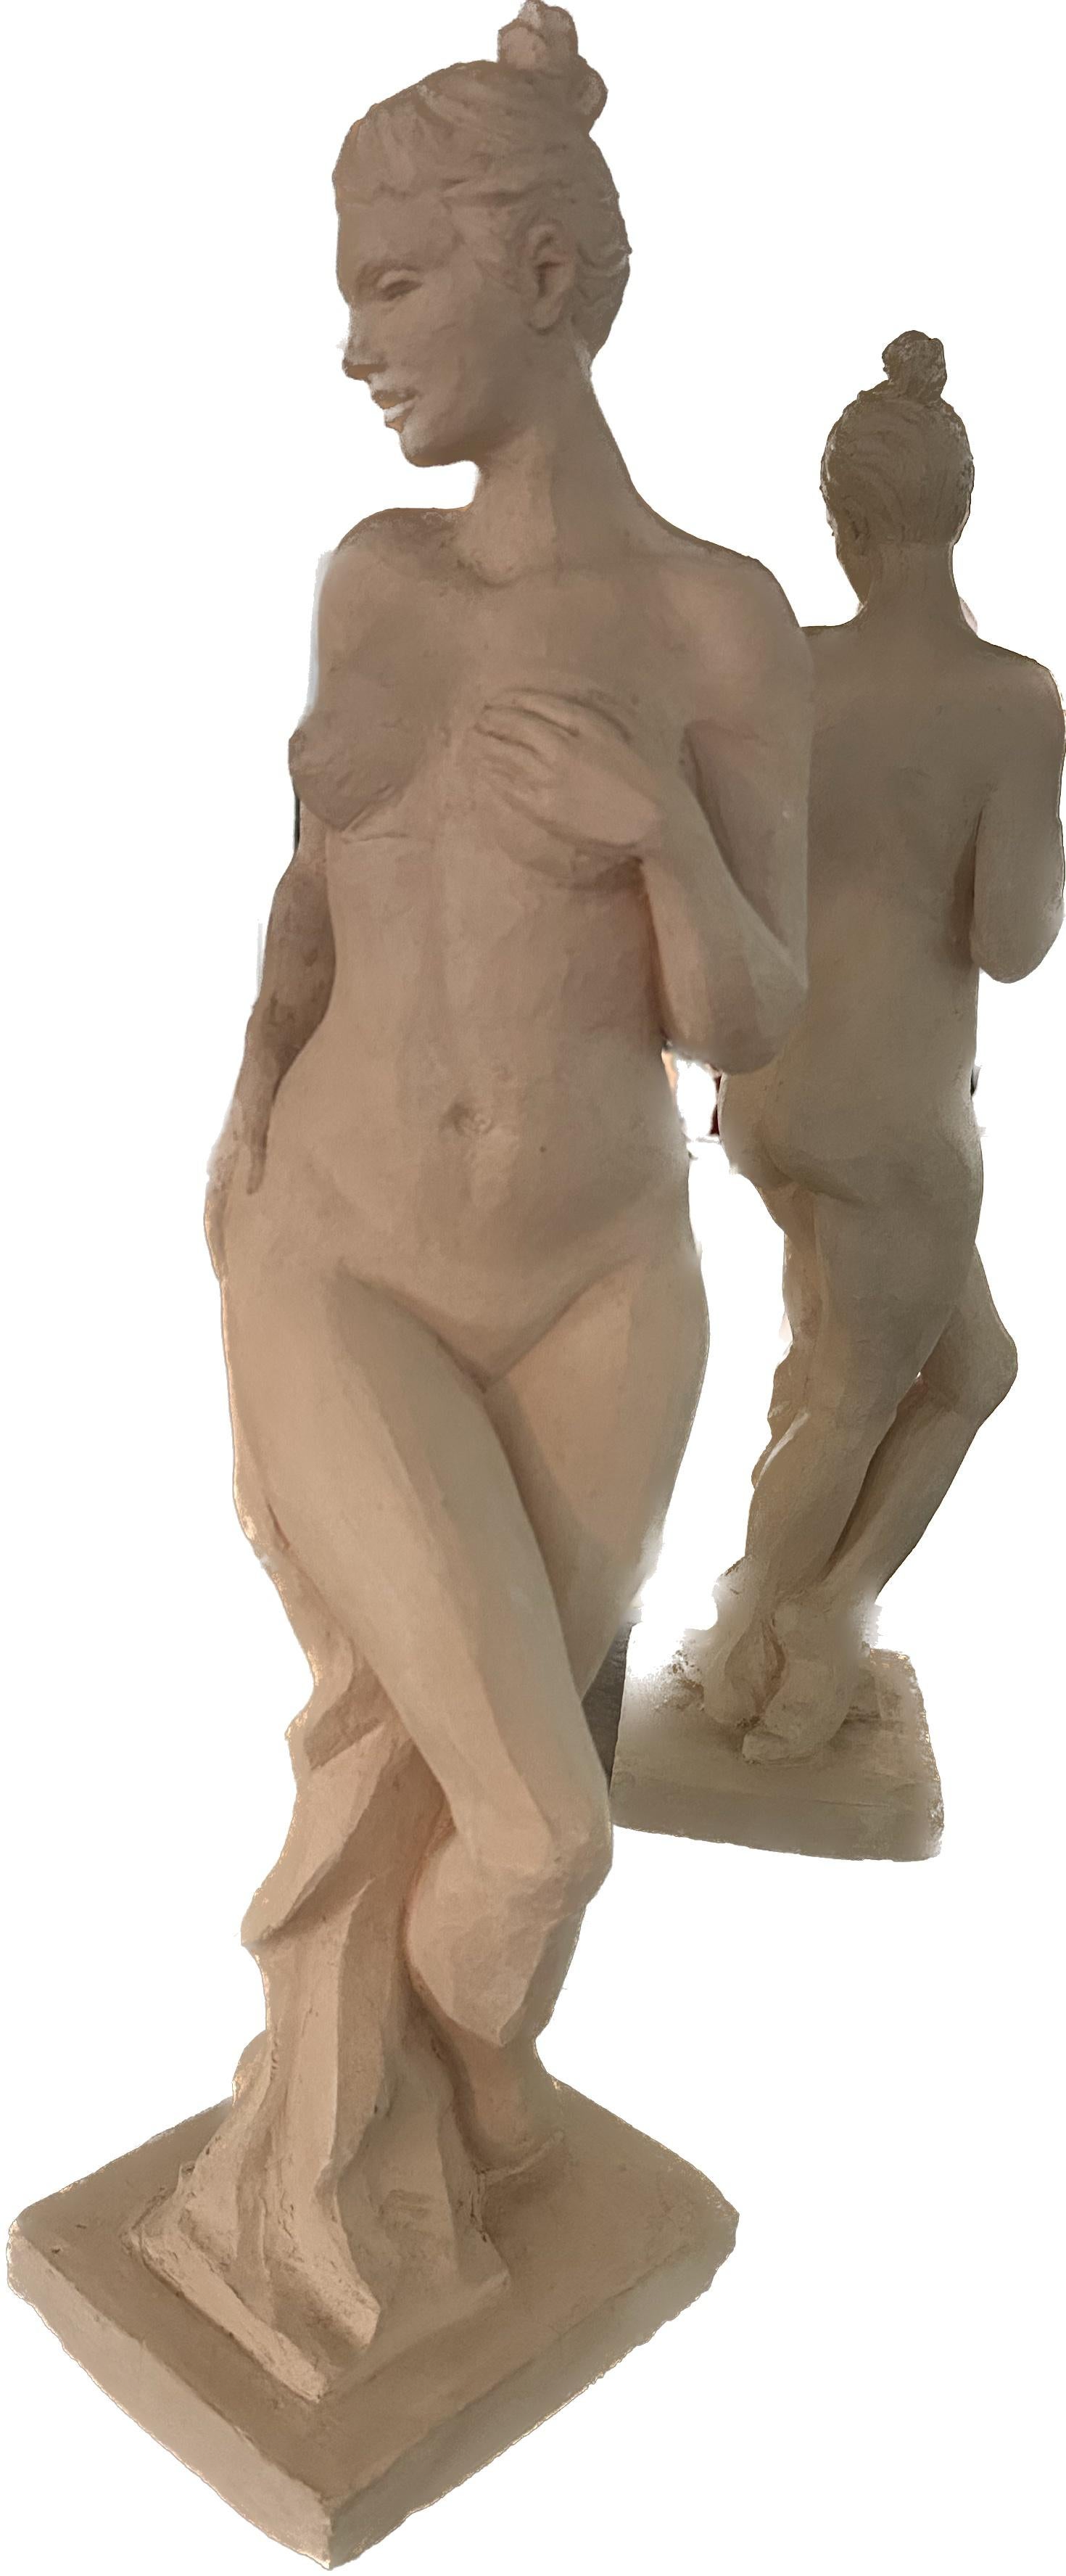 Karapet Balakeseryan  (Garo) Figurative Sculpture - Nude Figure, Sculpture, Ceramic Handmade by Garo, One of a Kind